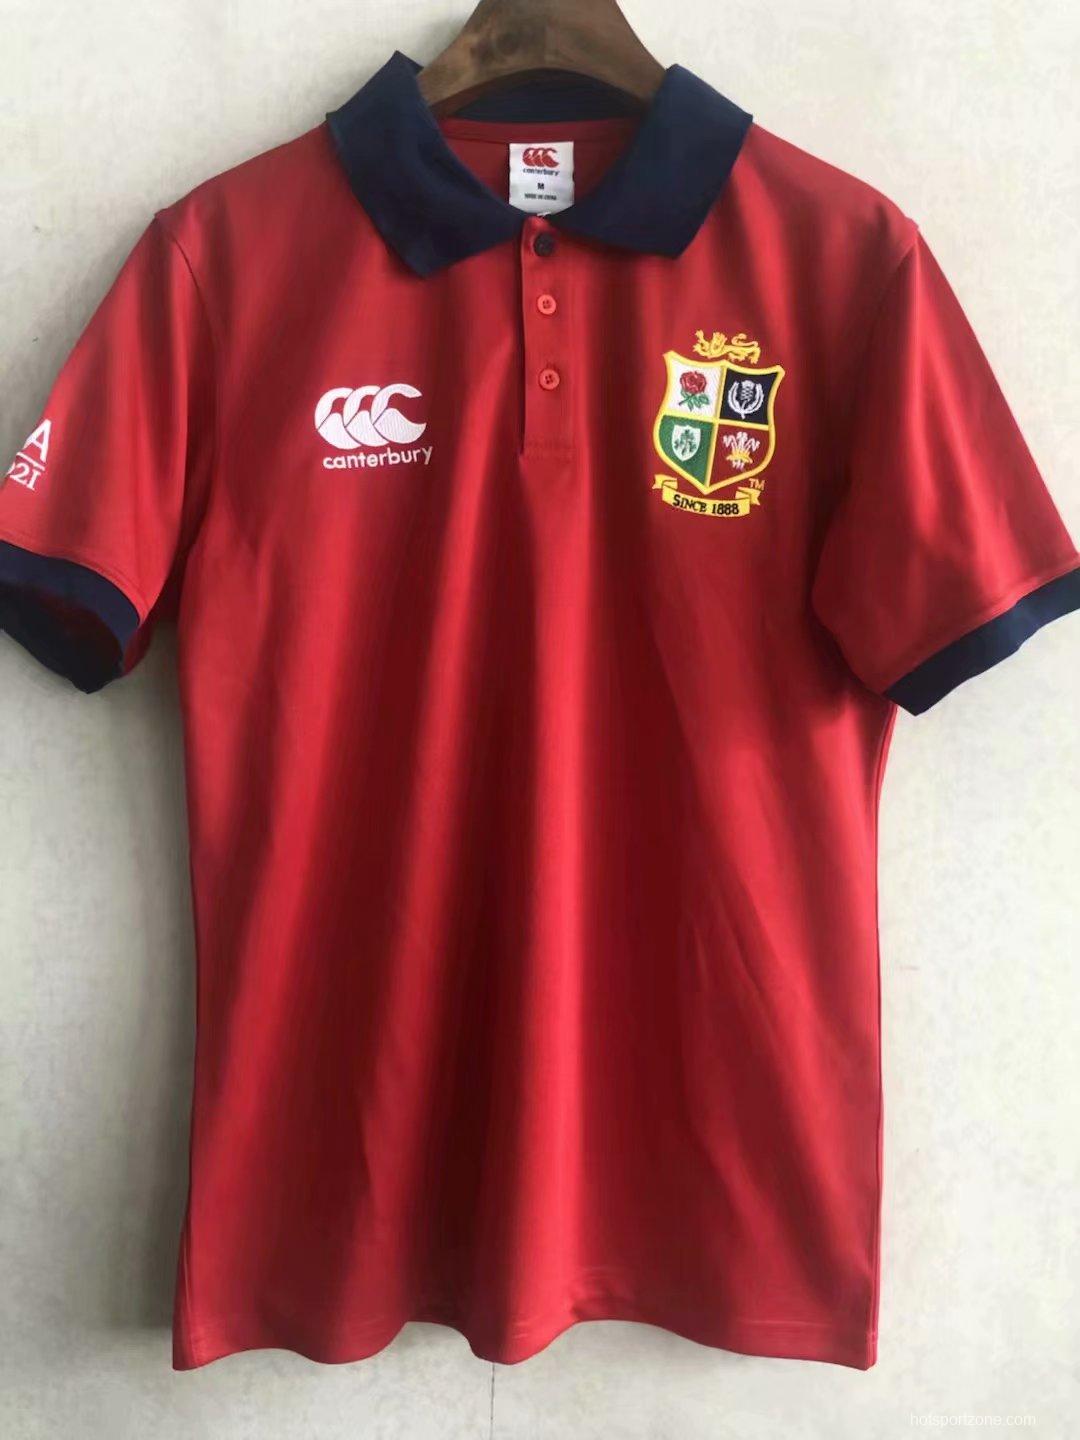 British &amp; Irish Lions Mens Home Nations Polo Shirt - Red